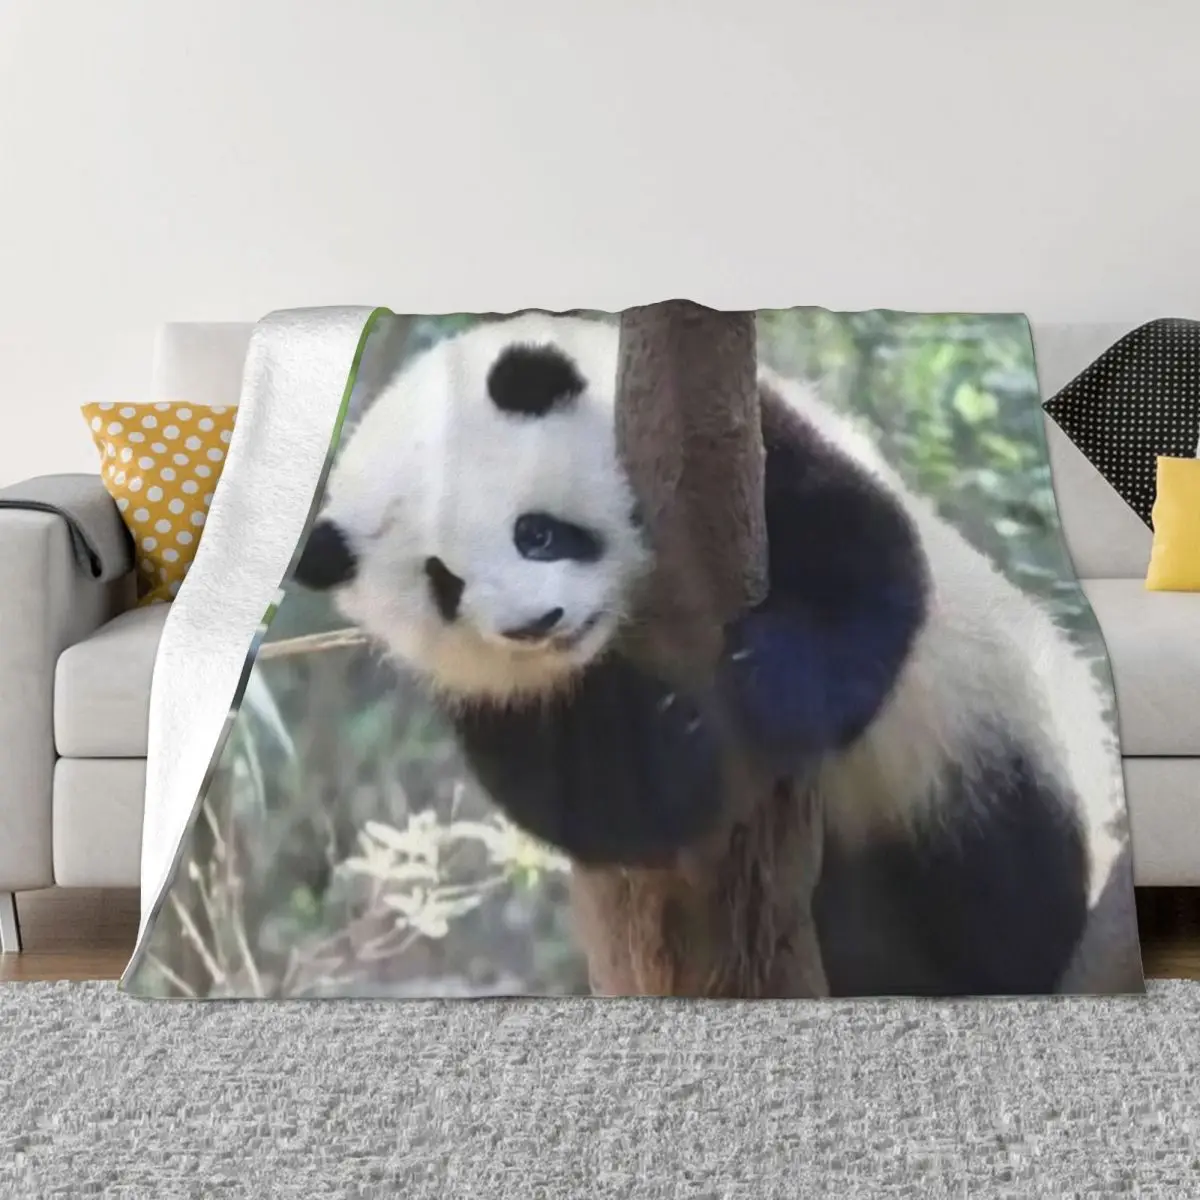 

Huahua панда животное одеяло супер теплый шерпа пледы одеяла для легкого ухода машина путешествия Кемпинг